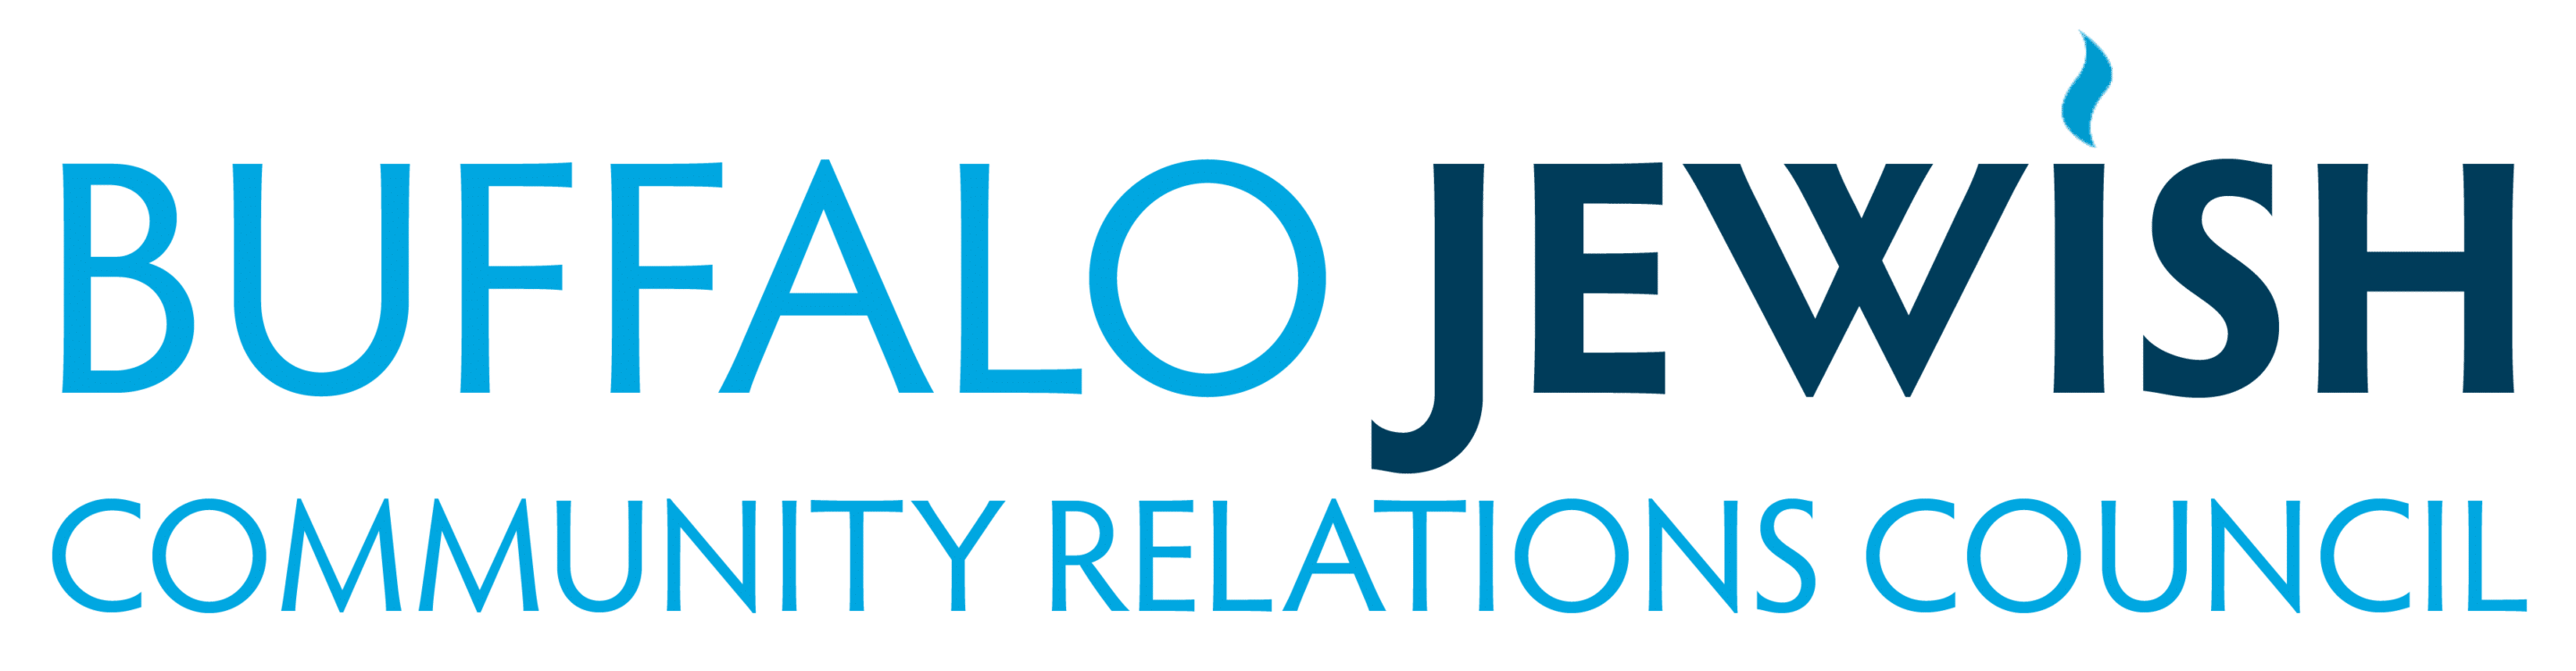 Community Relations - Buffalo JCRC Logo 1